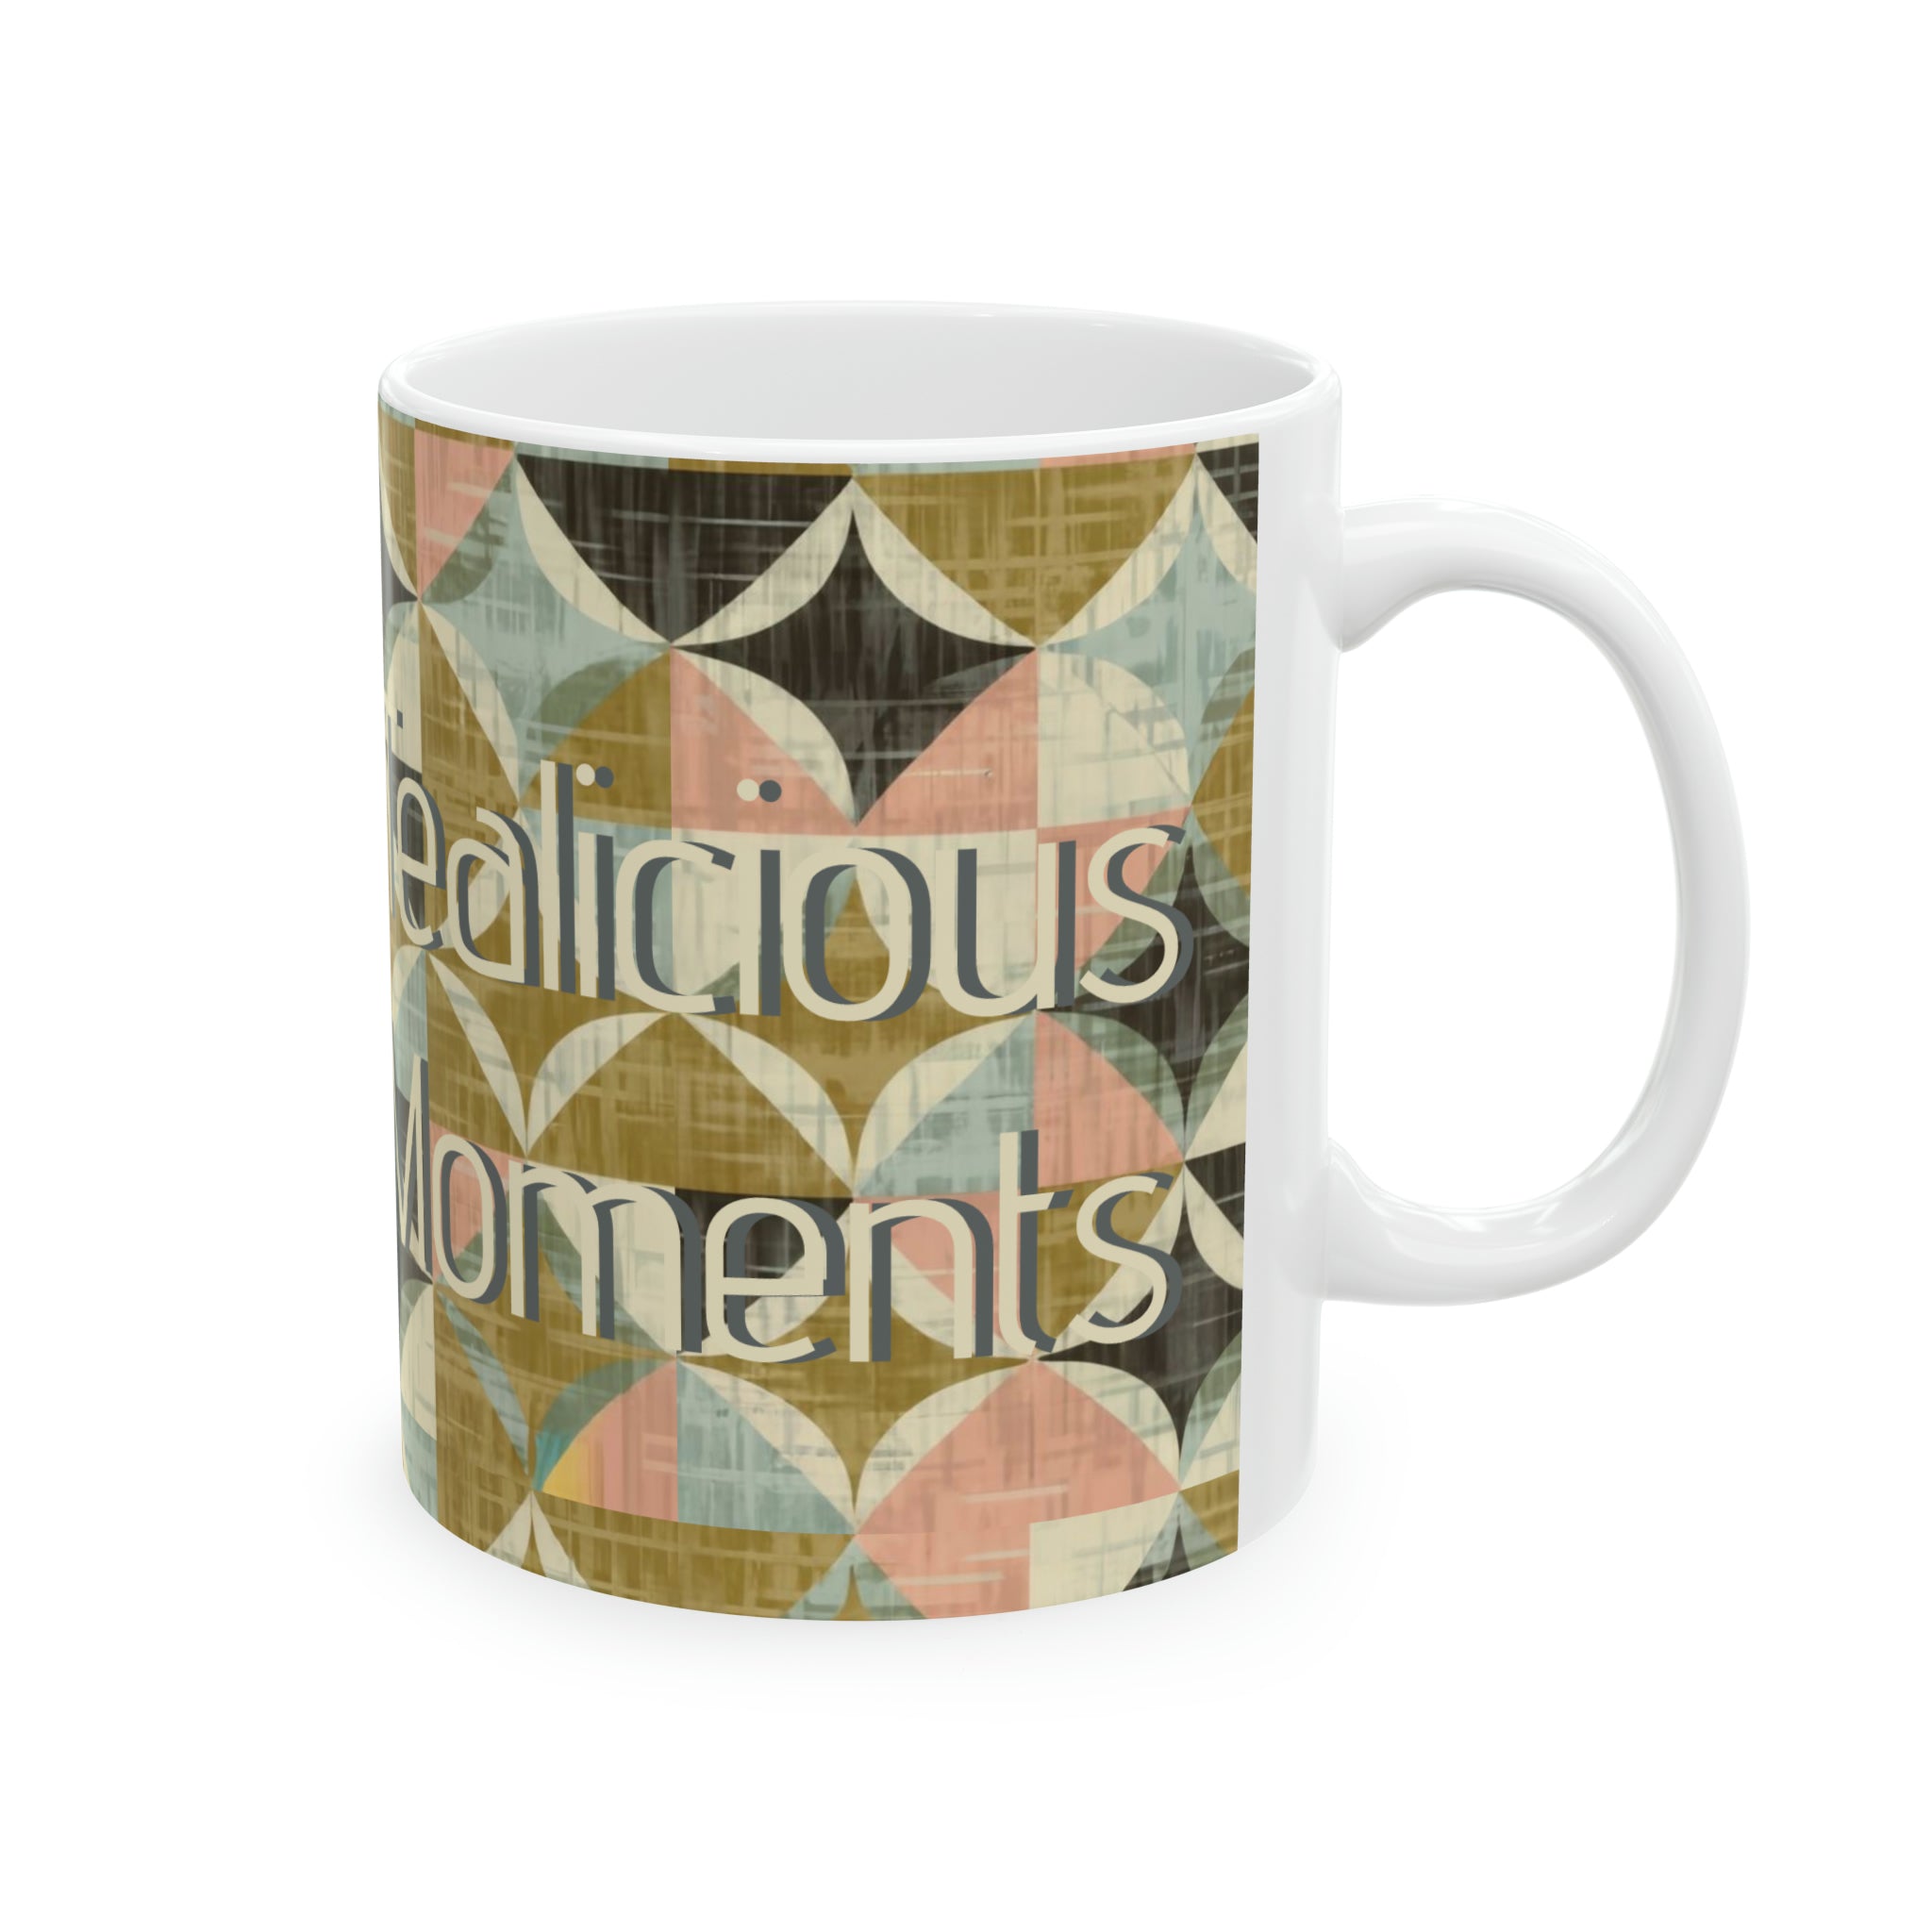 Tealicious Moments Ceramic Mug, 11oz